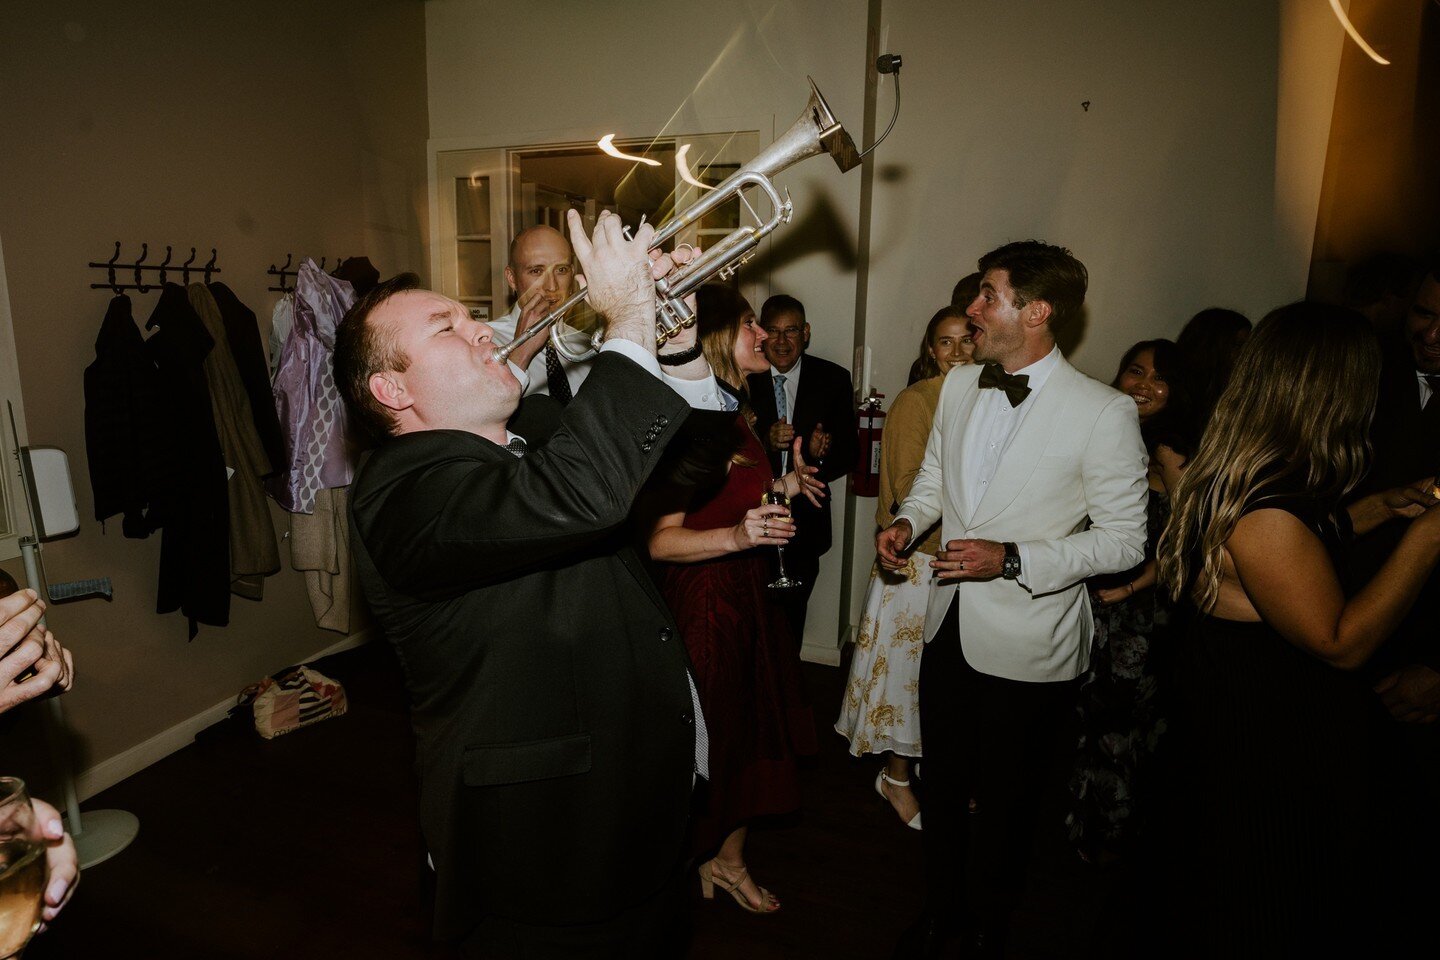 Flash back to Neal and Laura's epic wedding last year at @sault_daylesford . That is one kick ass white suit jacket, Neal! 😎⁠
⁠
📷 @oneheart_studios⁠
⁠
#djtrumpet #djsaxwedding #djsaxophone #partydj #djaustralia #pioneer #weddingdj #saxdj #reception